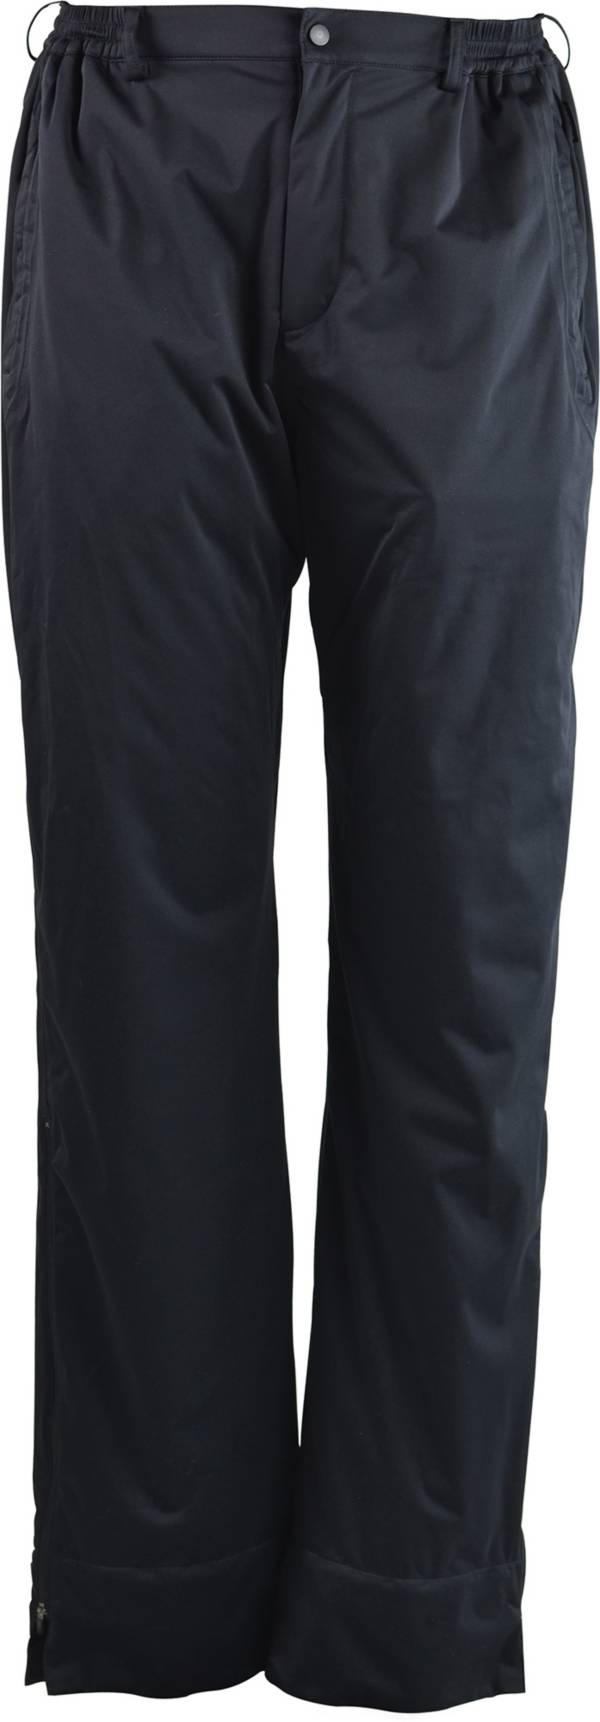 Sun Mountain Men's RainFlex Elite Waterproof Golf Pants product image